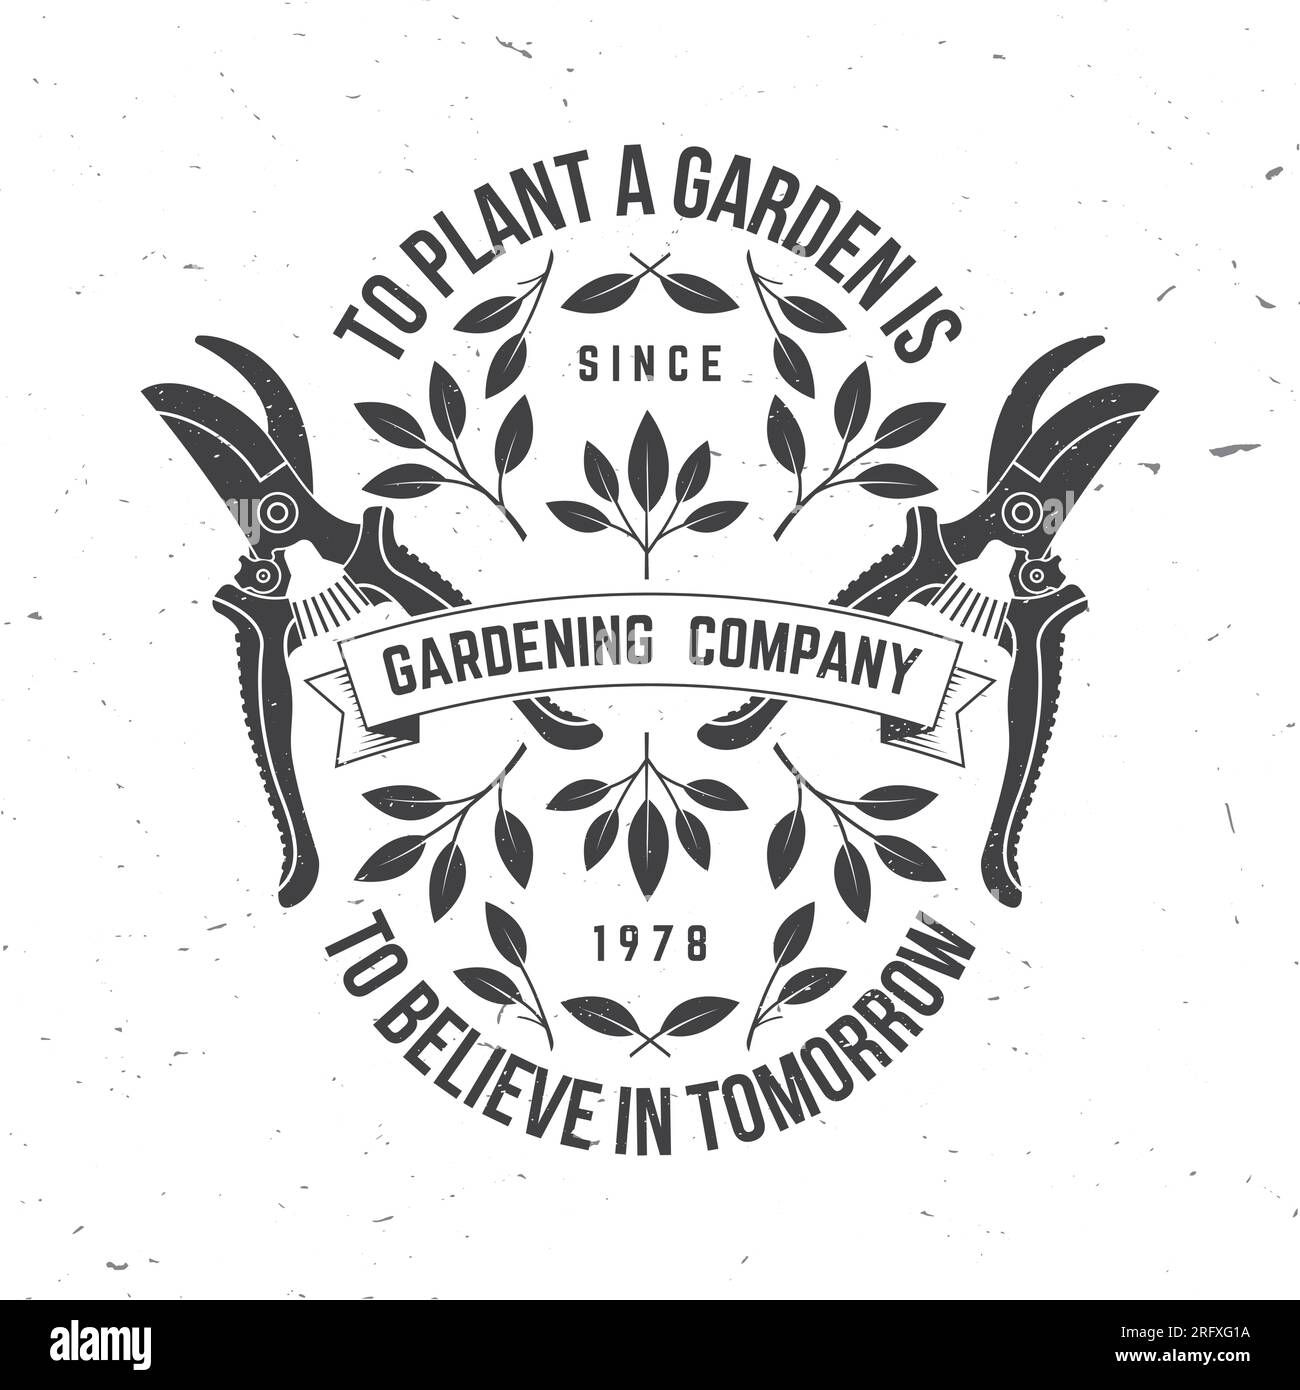 Gardening and yard work services emblem, label, badge, logo. Vector illustration. For sign, patch, shirt design with hand secateurs, garden pruner Stock Vector